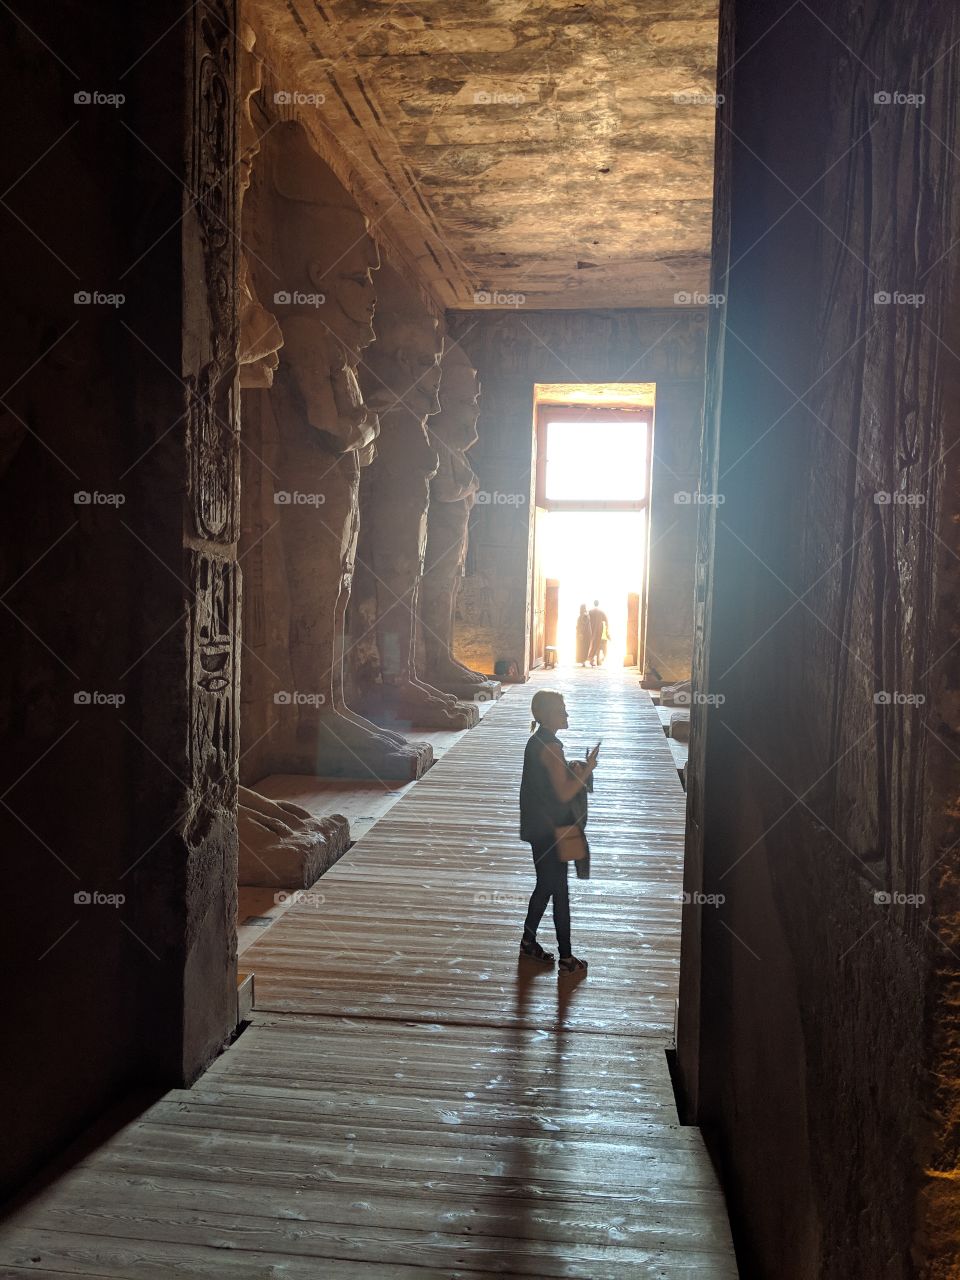 Exploring the Temple of Abu Simbel in Abu Simbel, Egypt